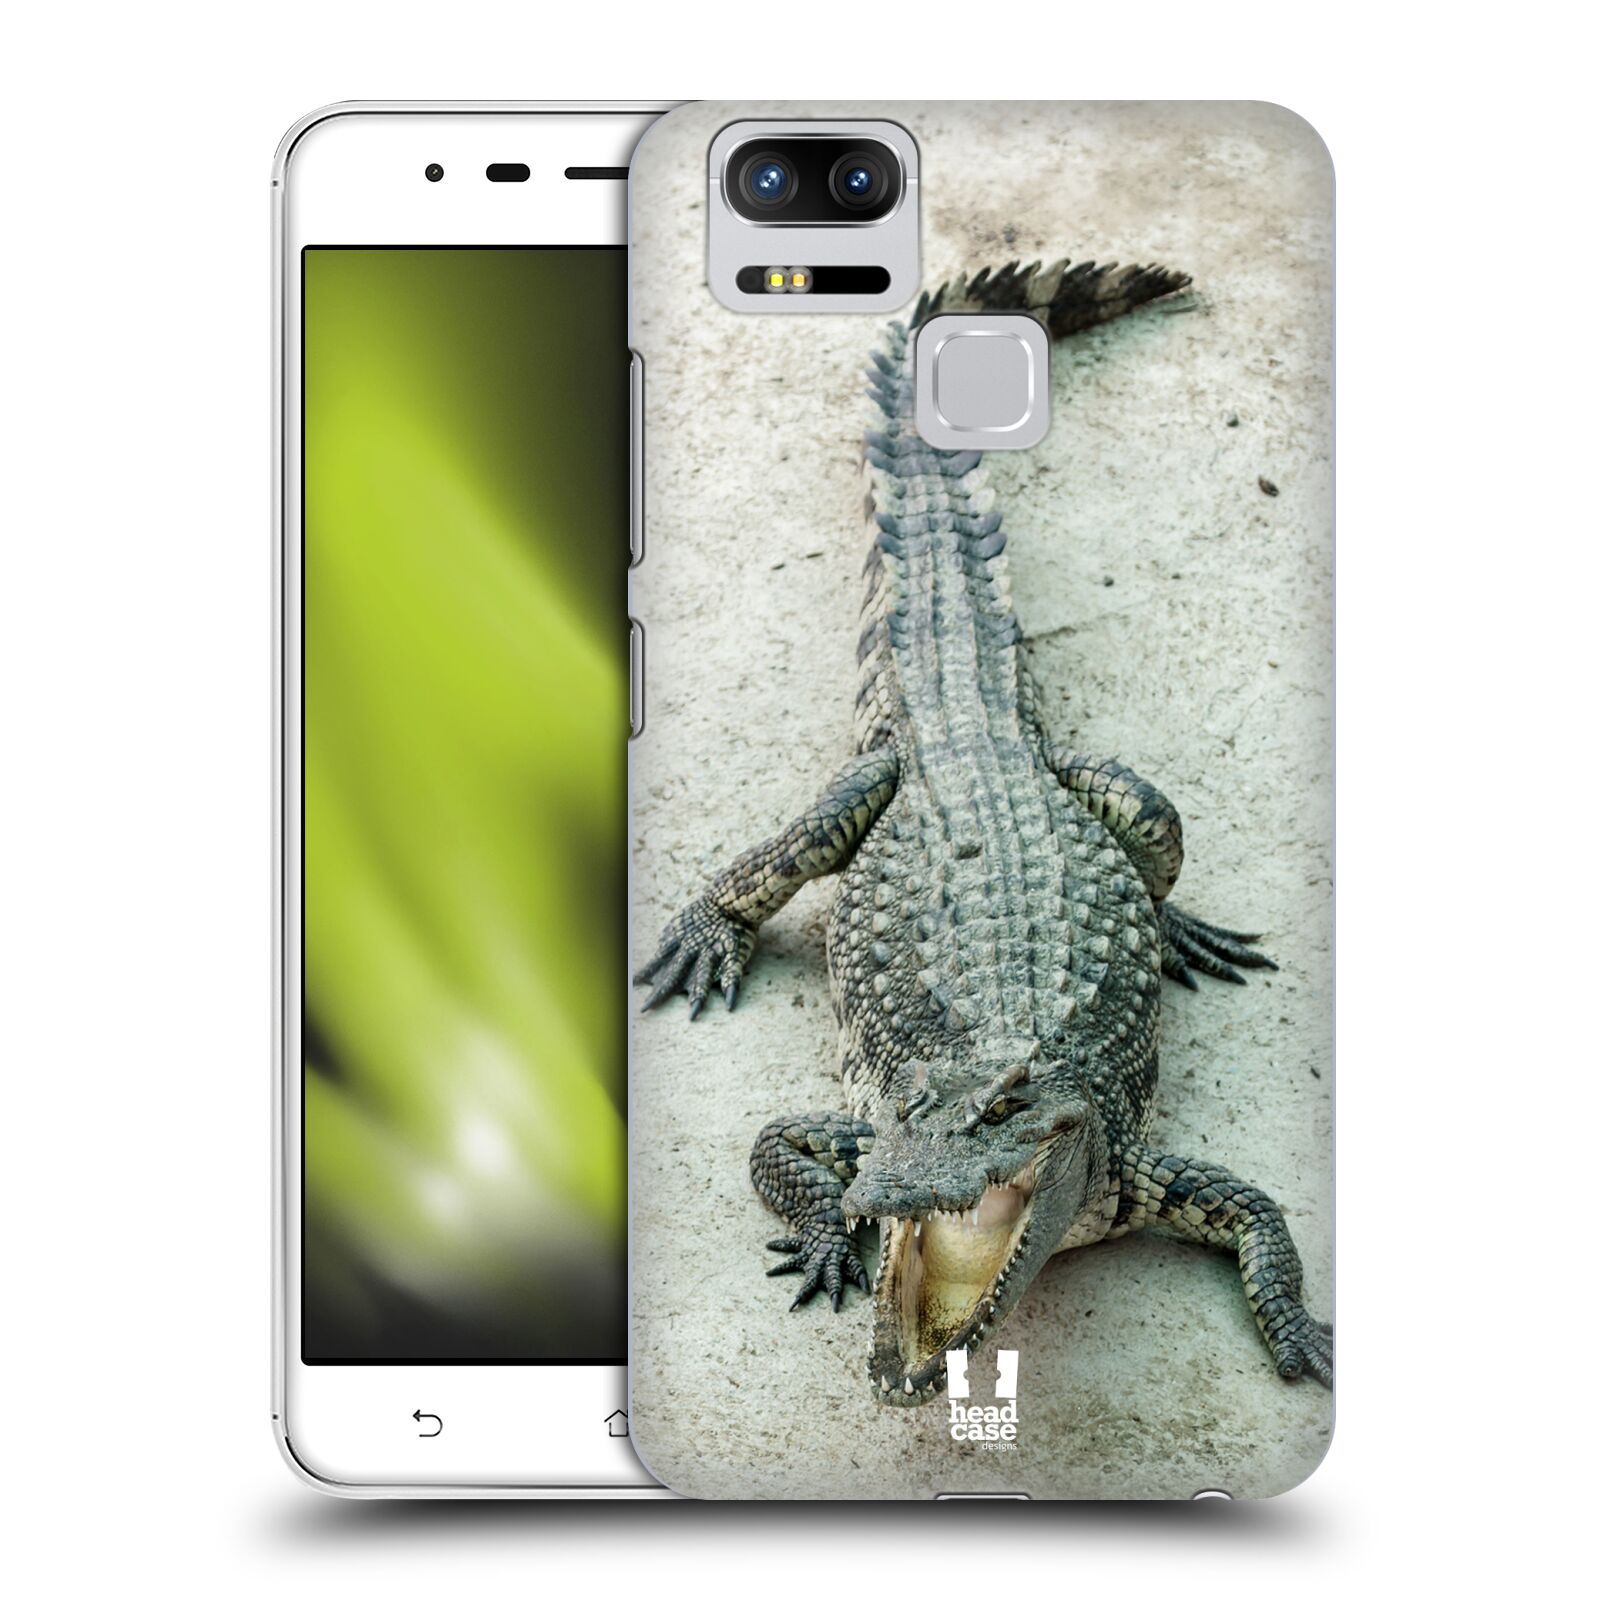 HEAD CASE plastový obal na mobil Asus Zenfone 3 Zoom ZE553KL vzor Divočina, Divoký život a zvířata foto KROKODÝL, KAJMAN